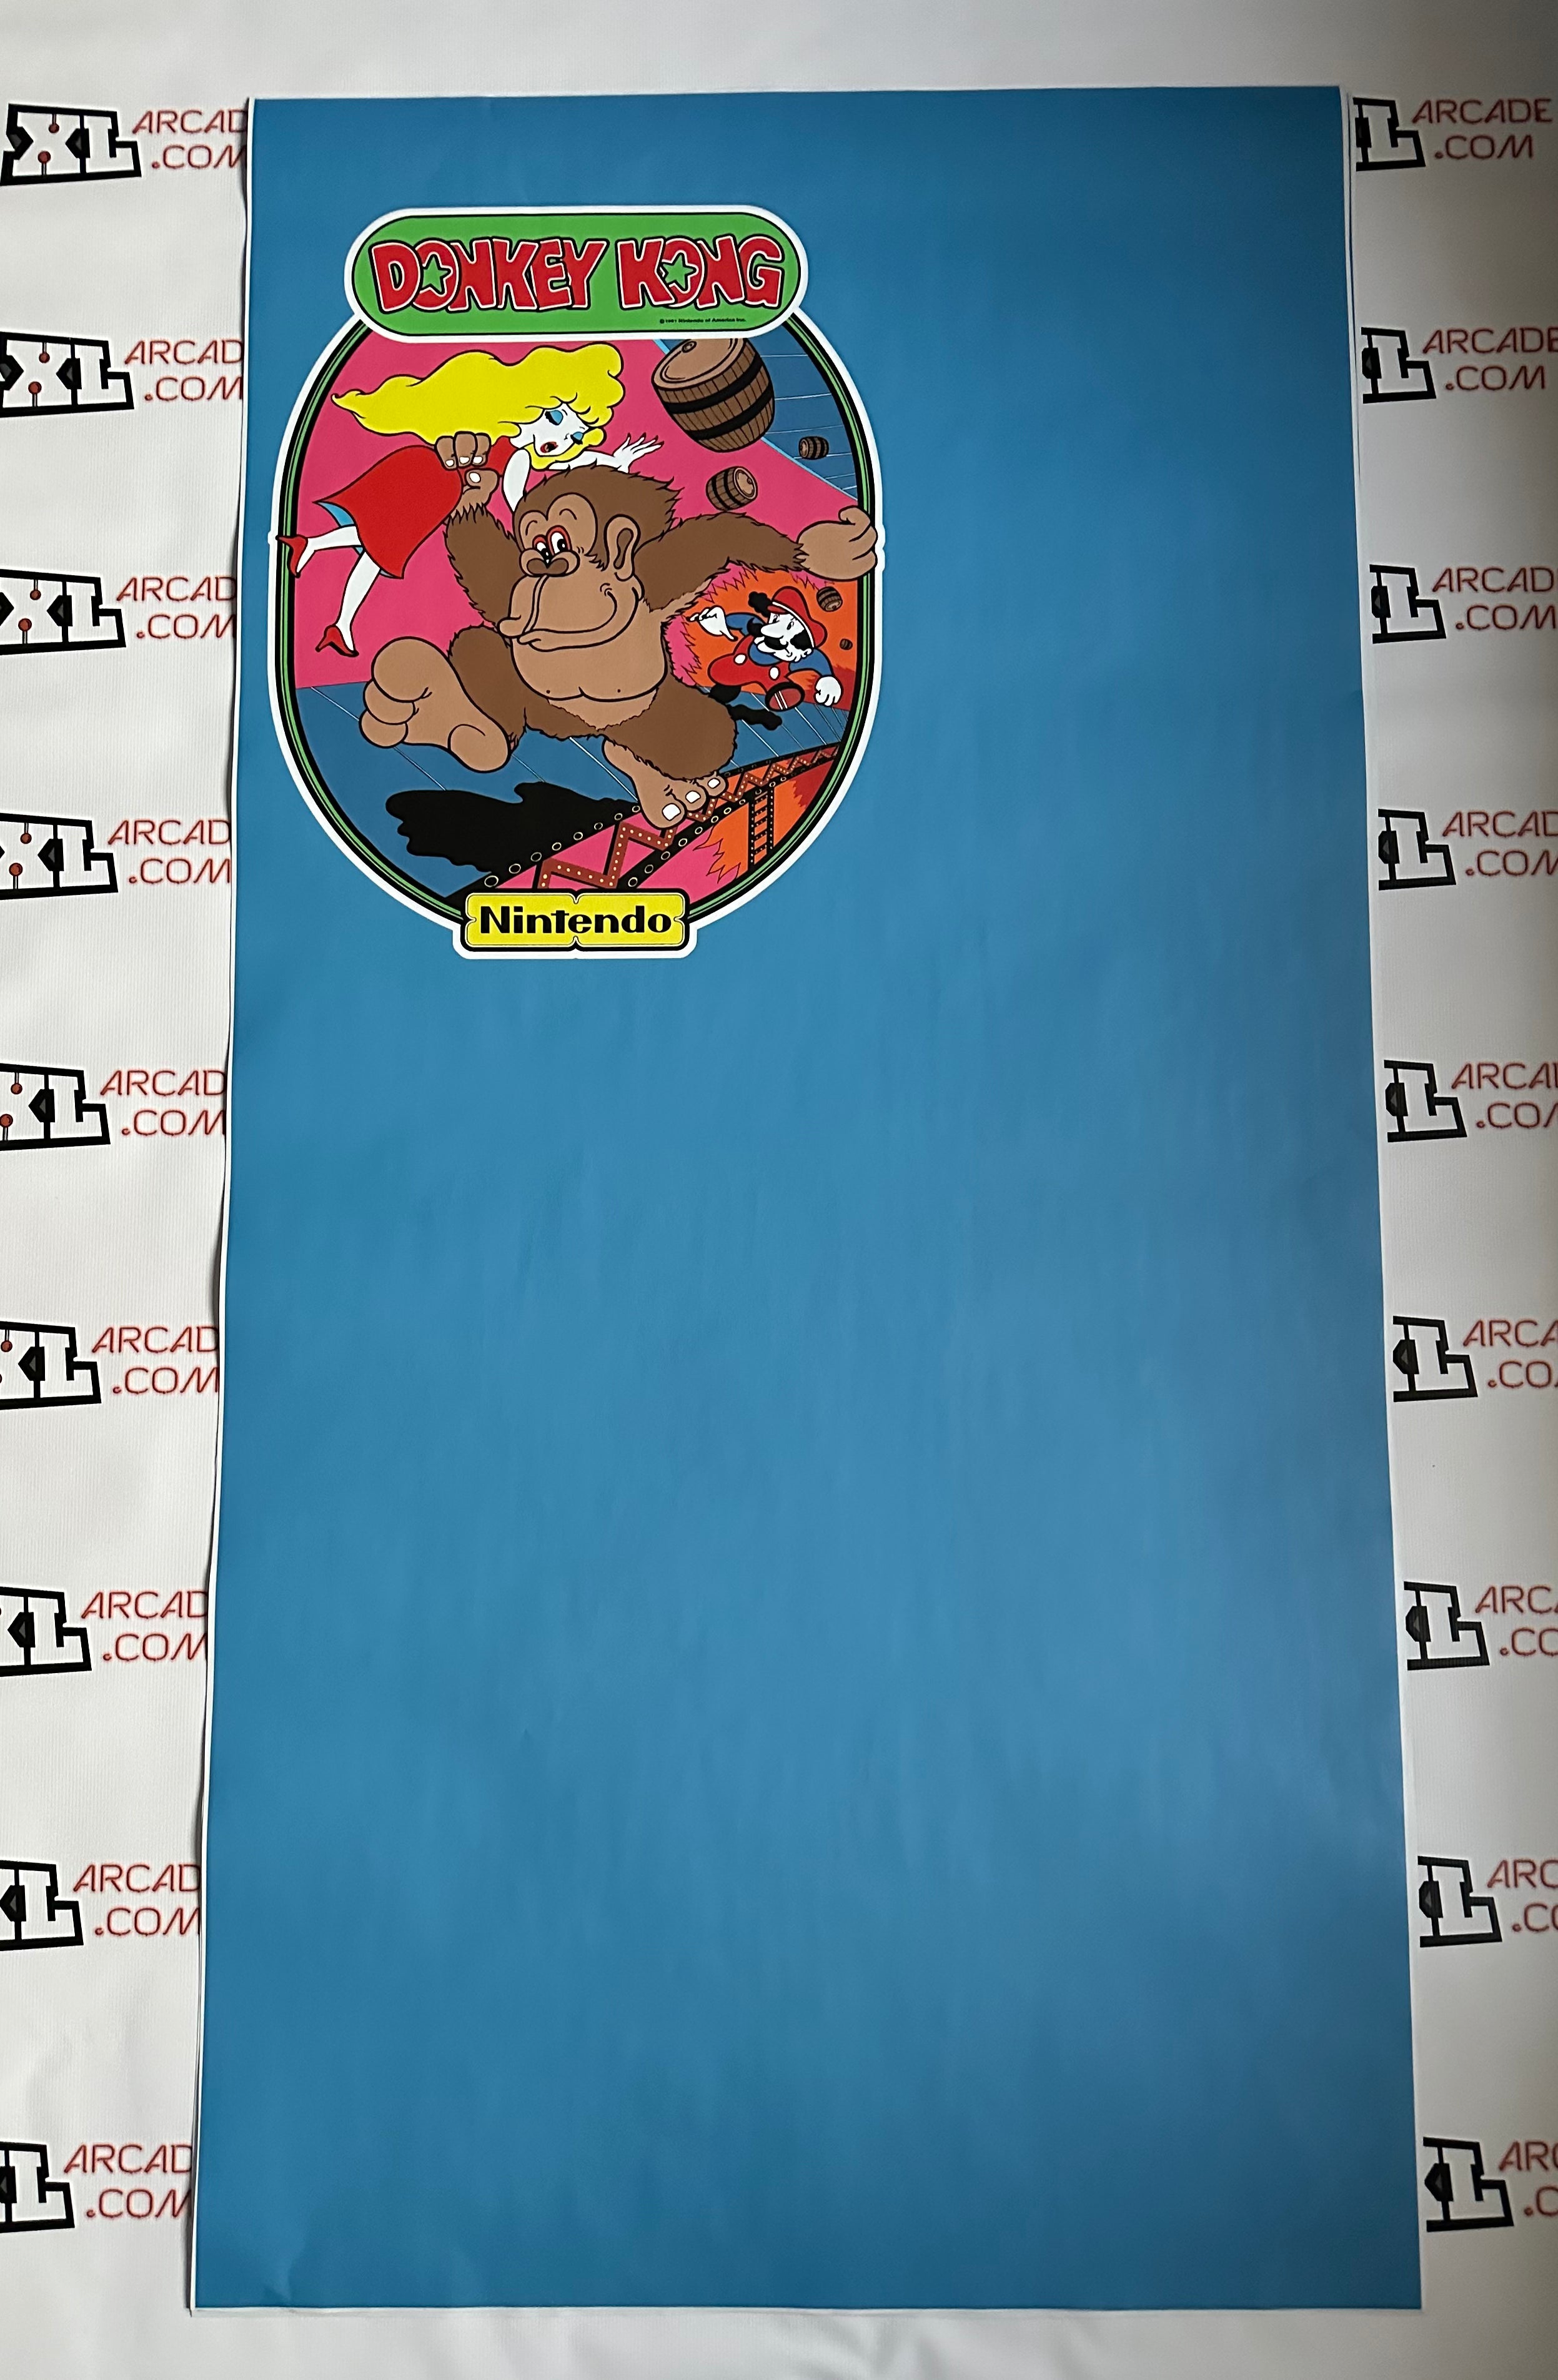 Arte lateral completo de Donkey Kong